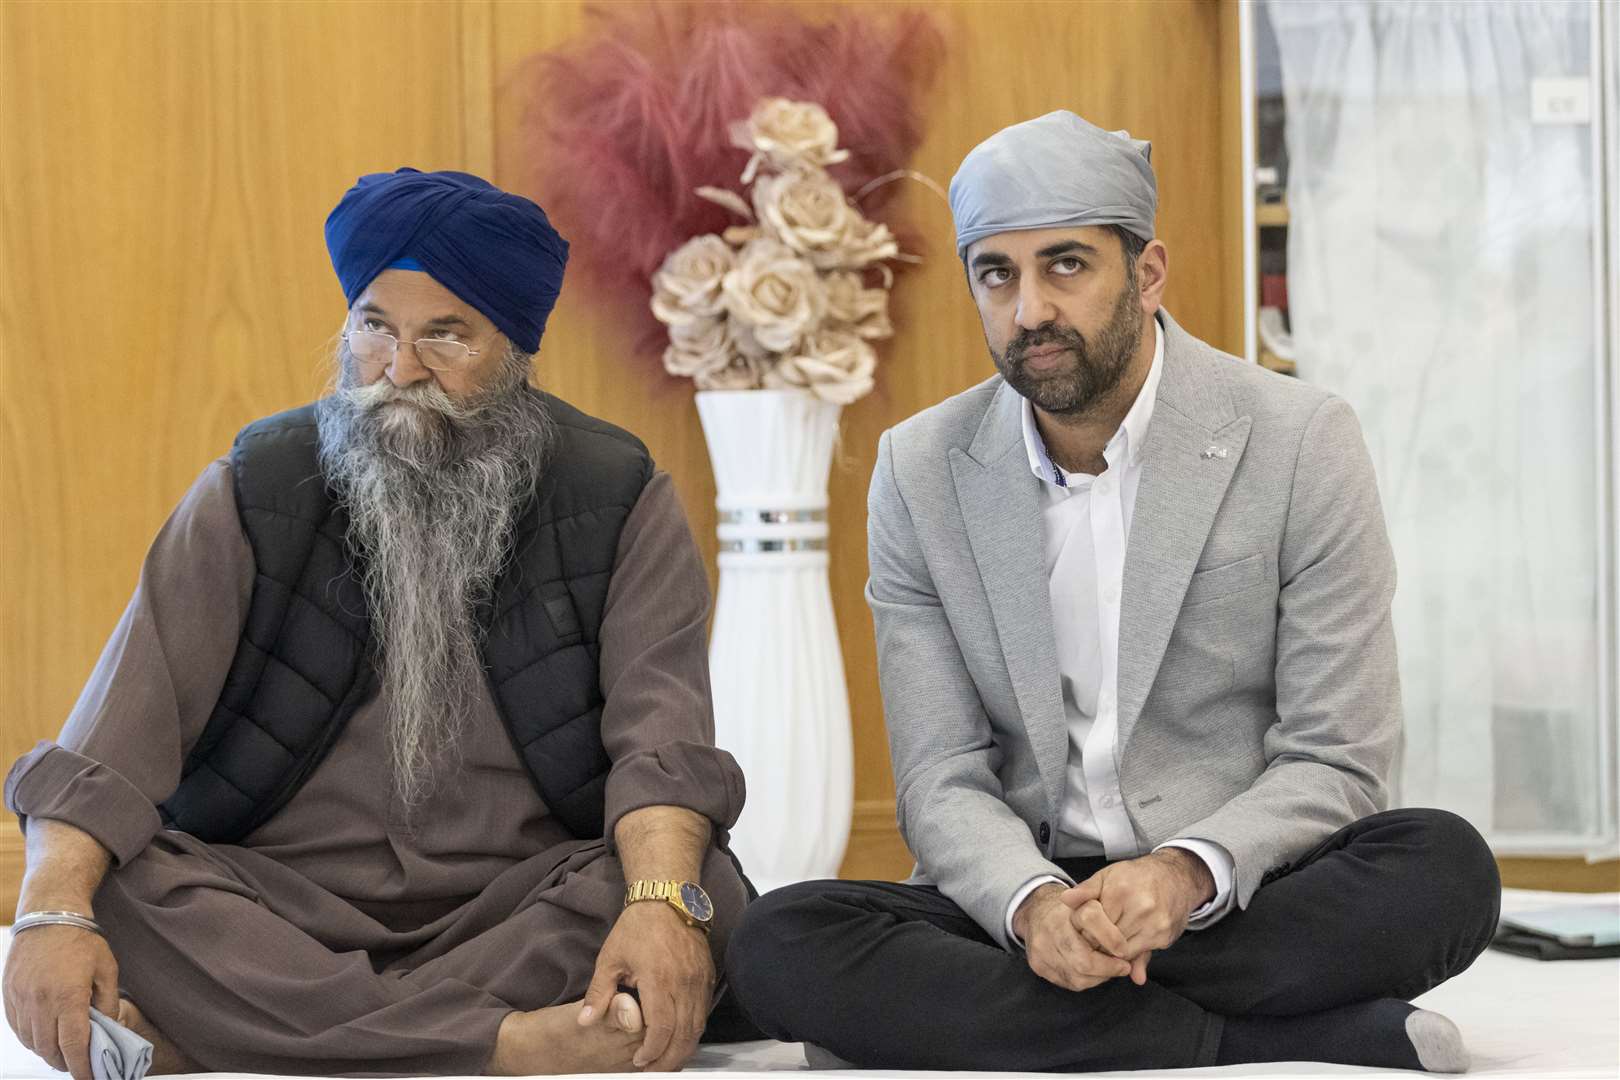 Humza Yousaf met members of Glasgow’s Sikh community (Robert Perry/PA)